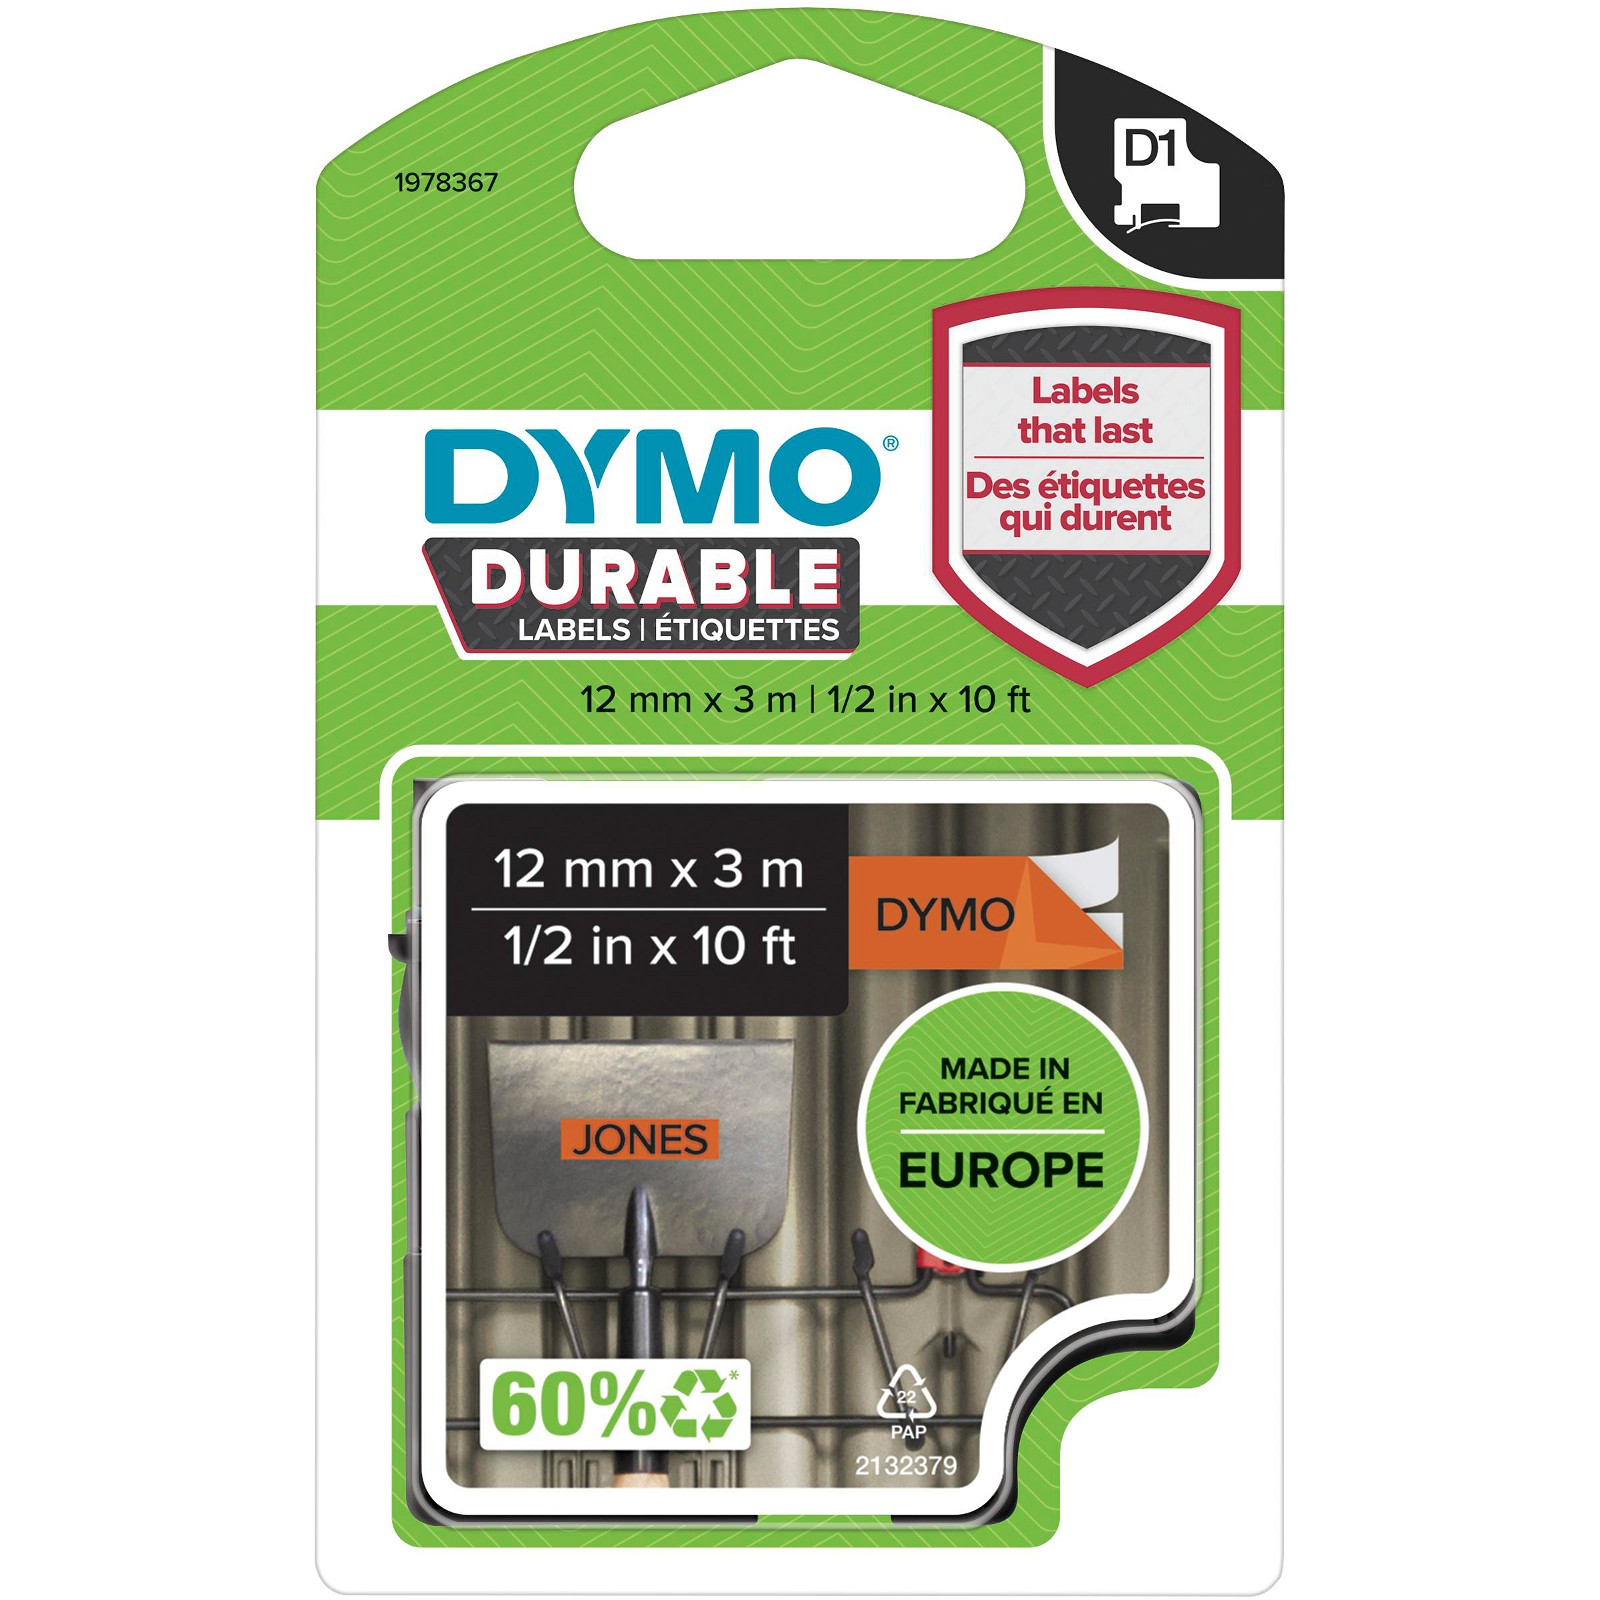 Dymo D1 Durable tape sort/orange 12mmx3m